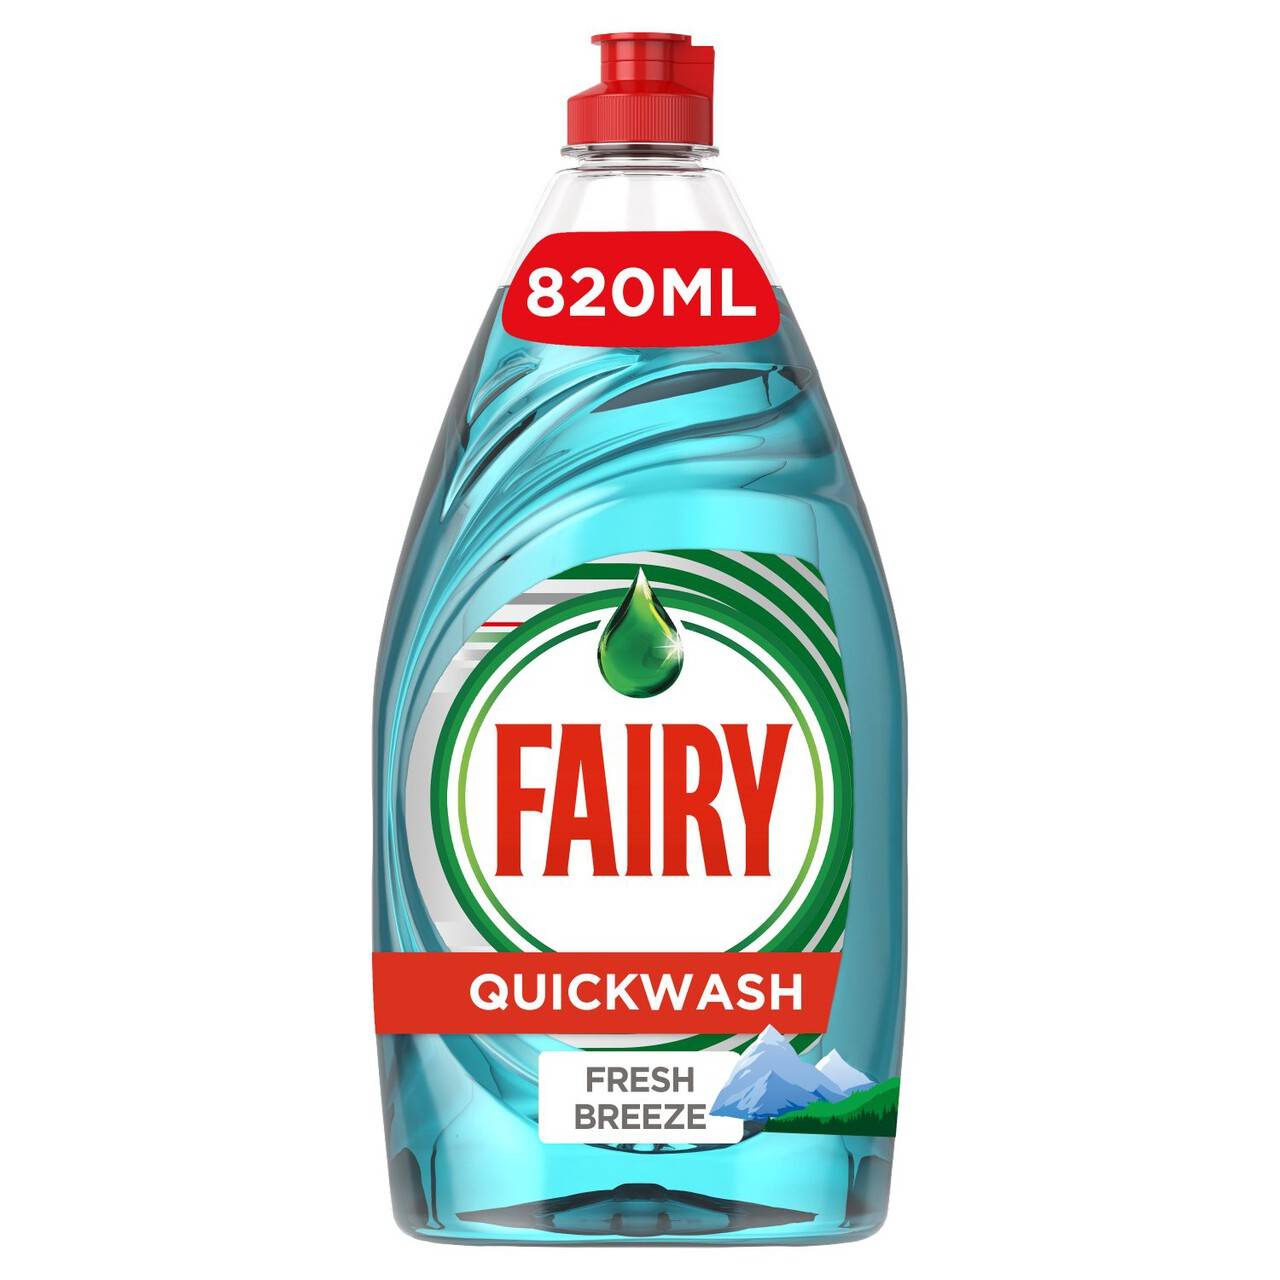 Fairy Quickwash Fresh Breeze Washing Up Liquid